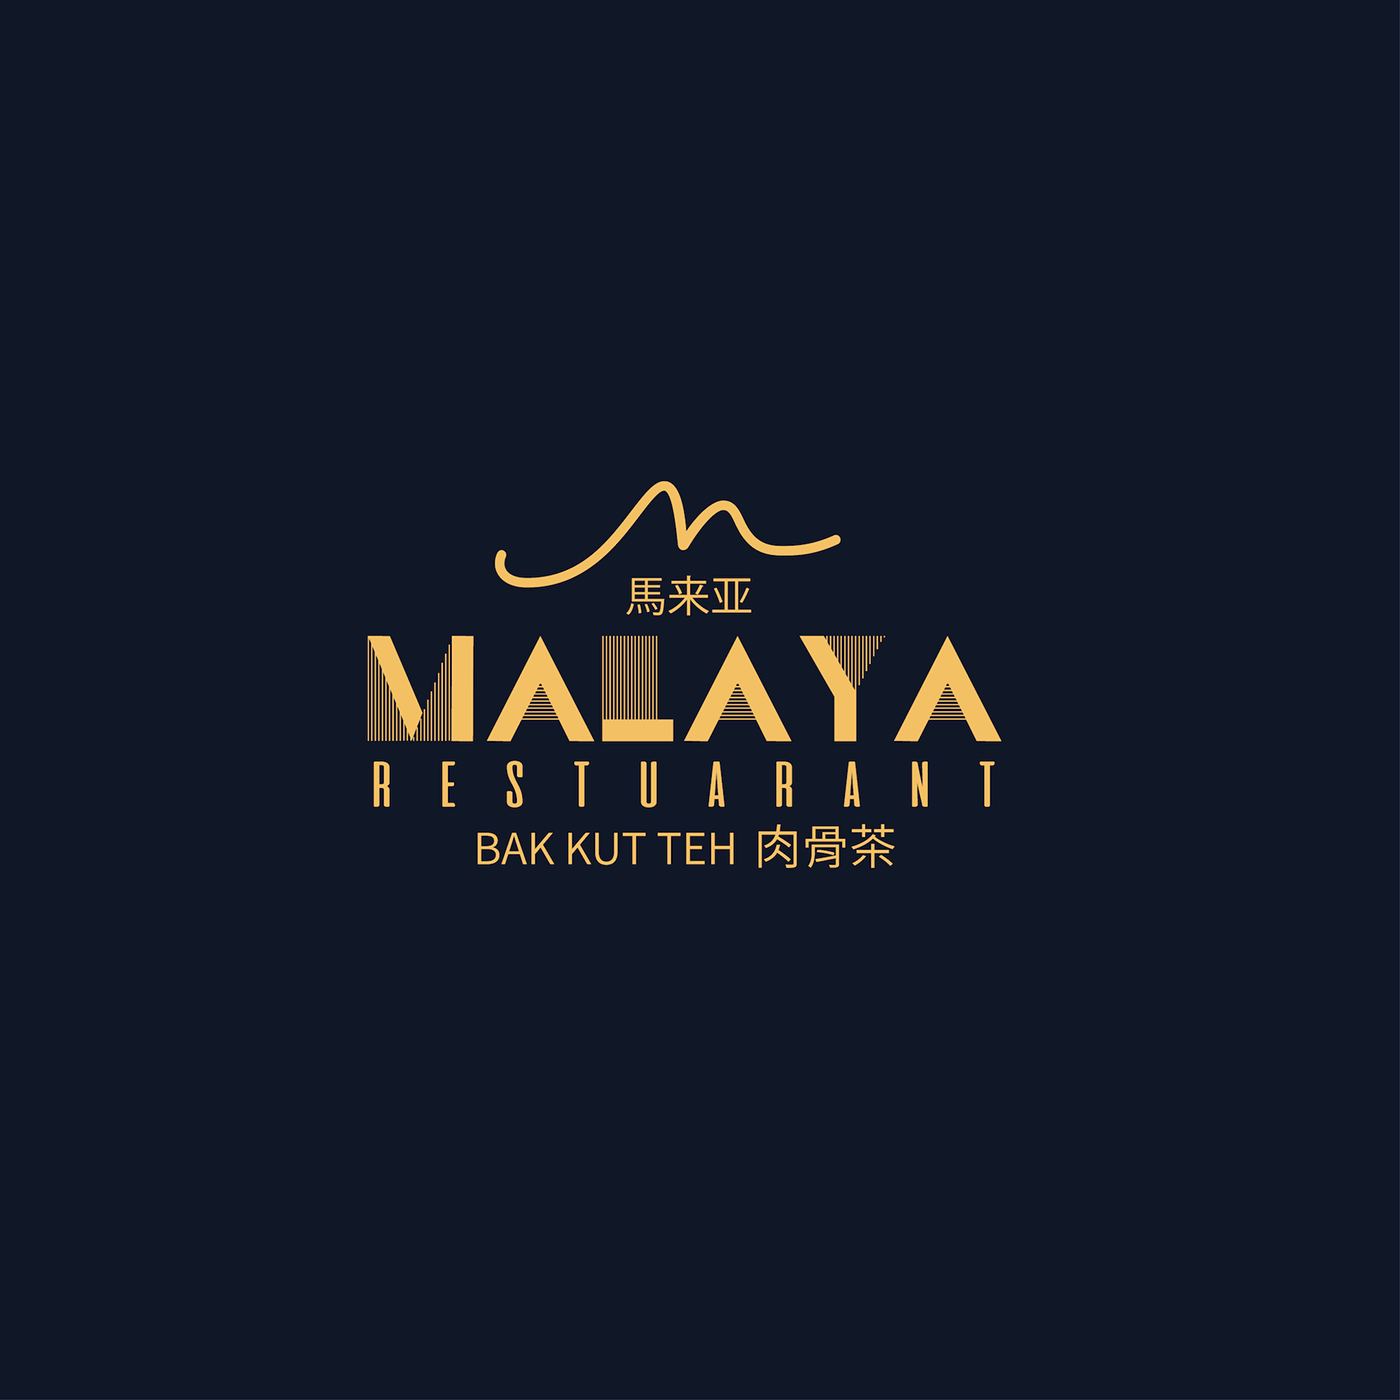 logo restaurant malaya